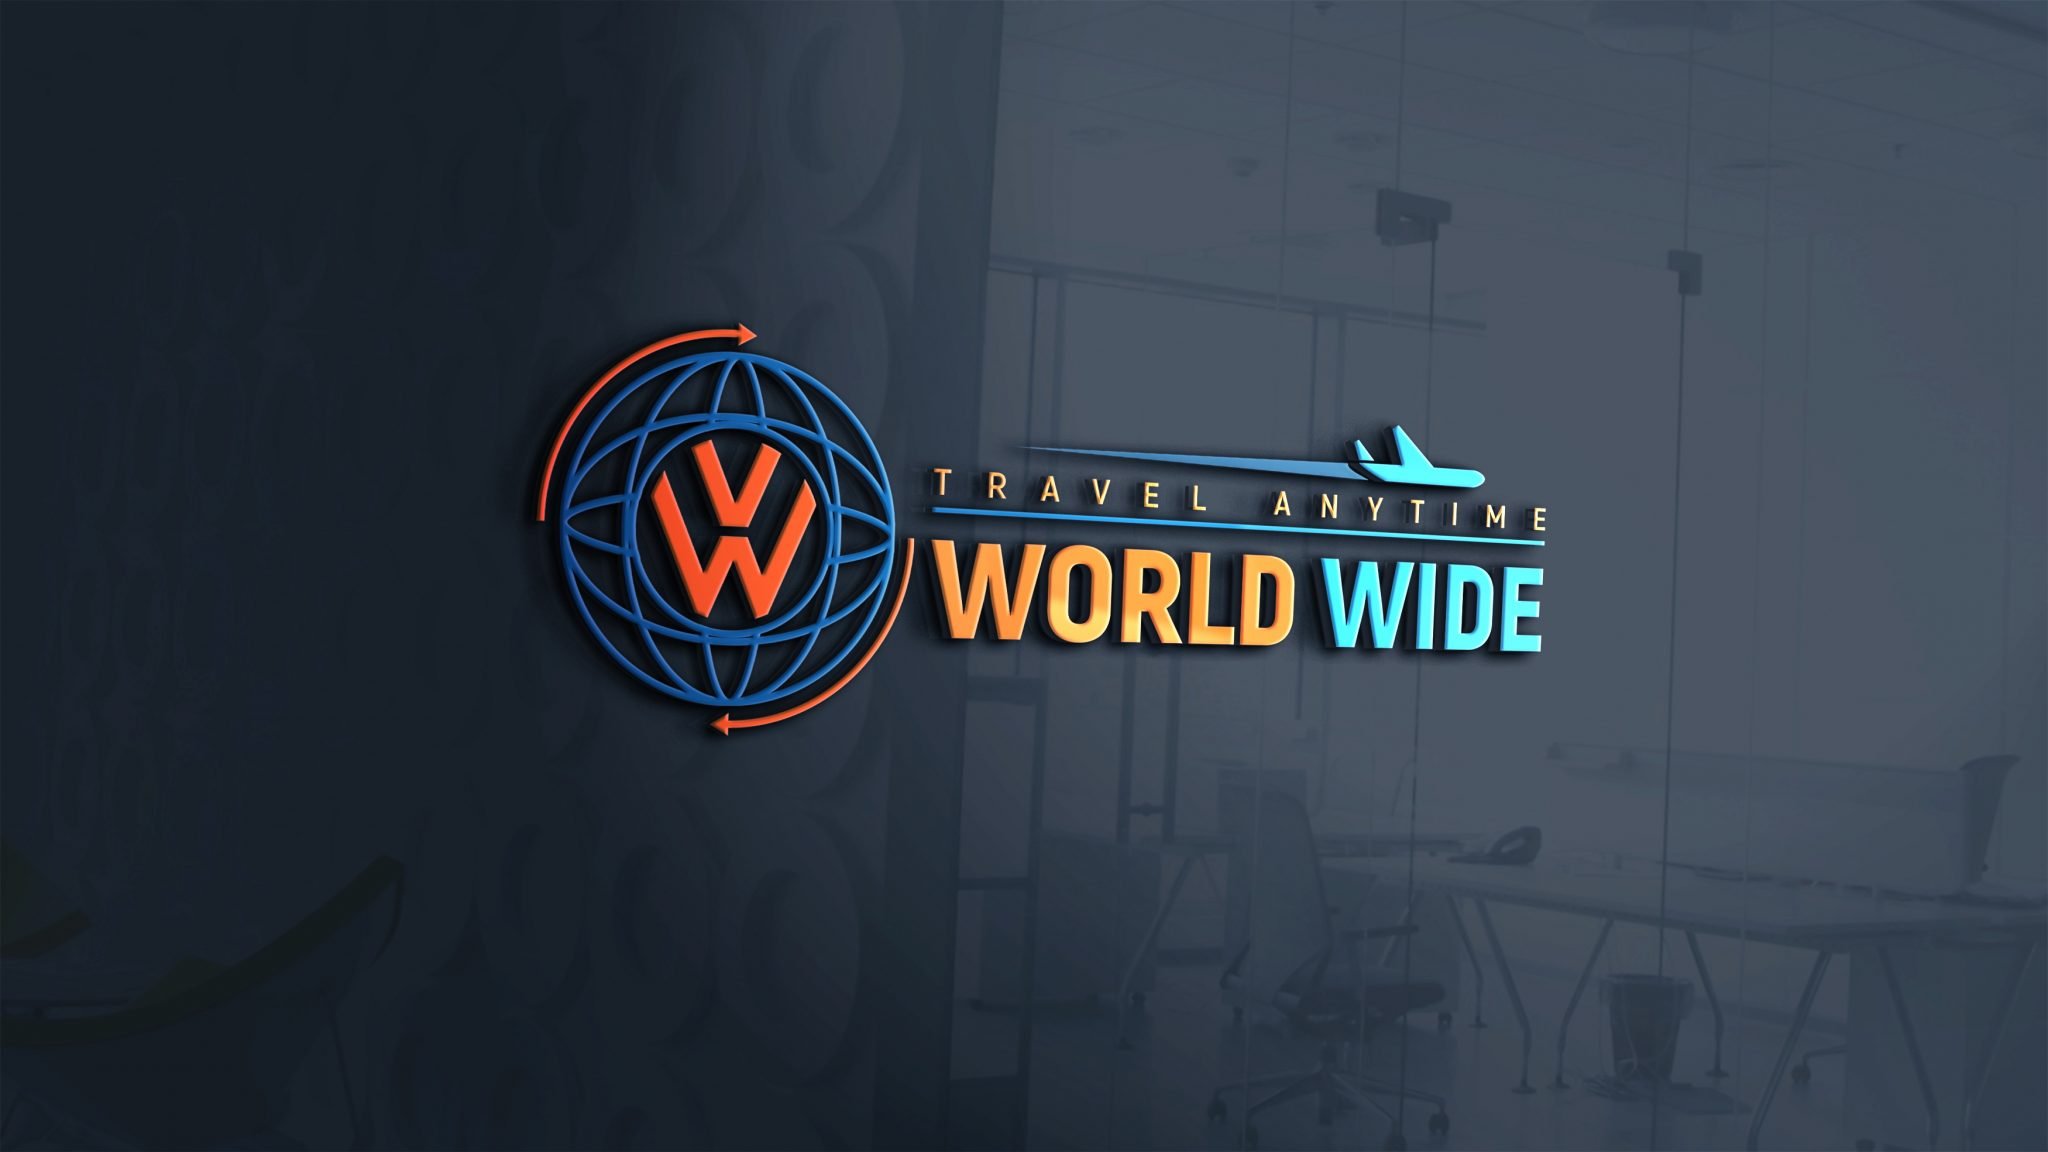 World Wide Travel Company Logo Design GraphicsFamily